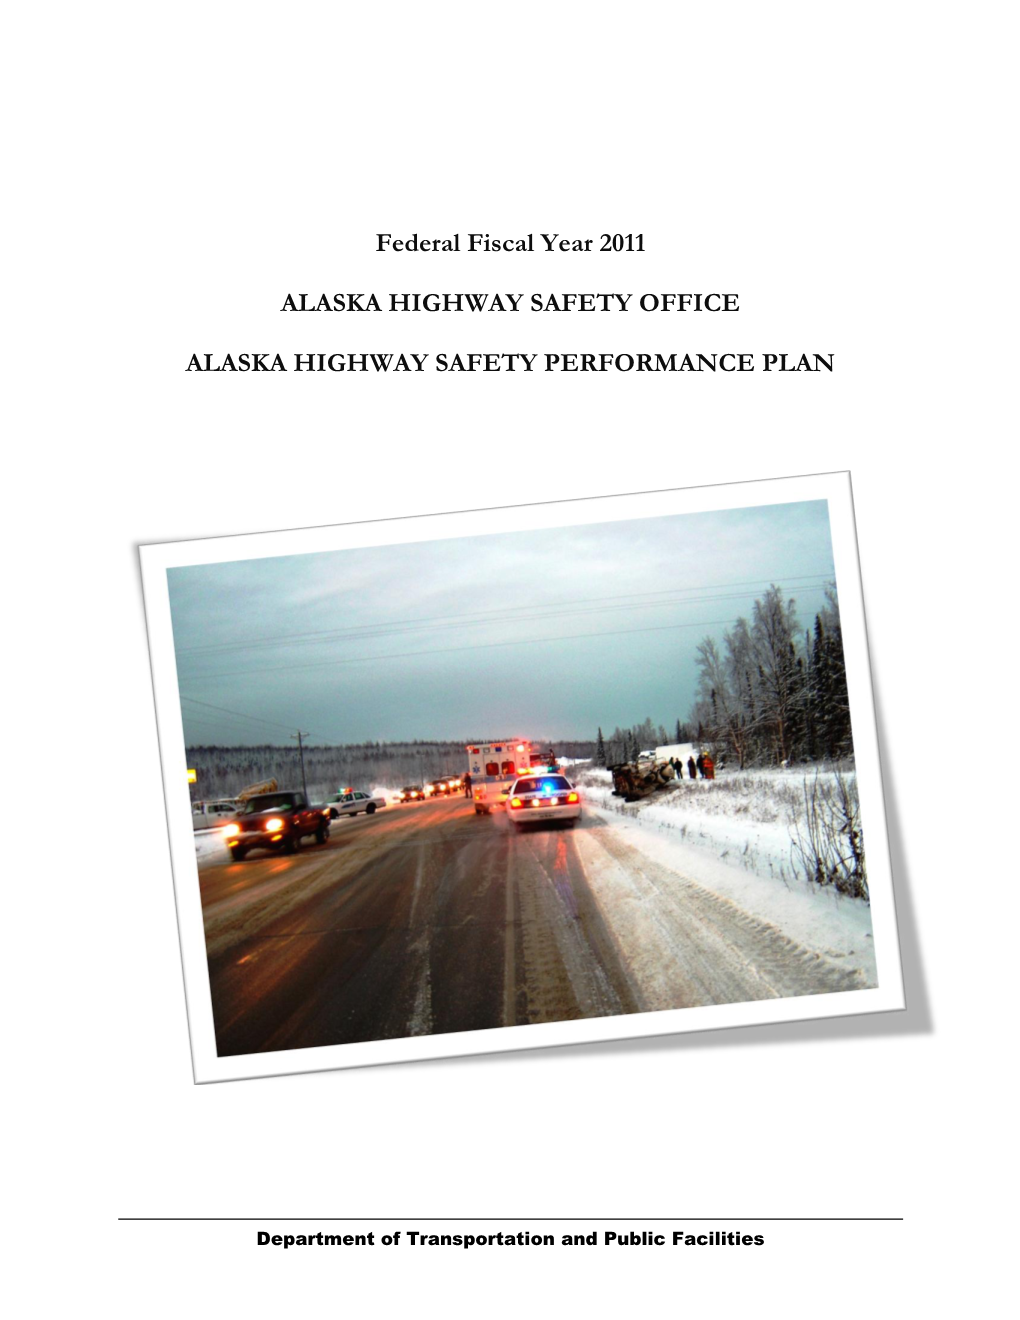 Fatal Crashes & Fatalities in Alaska